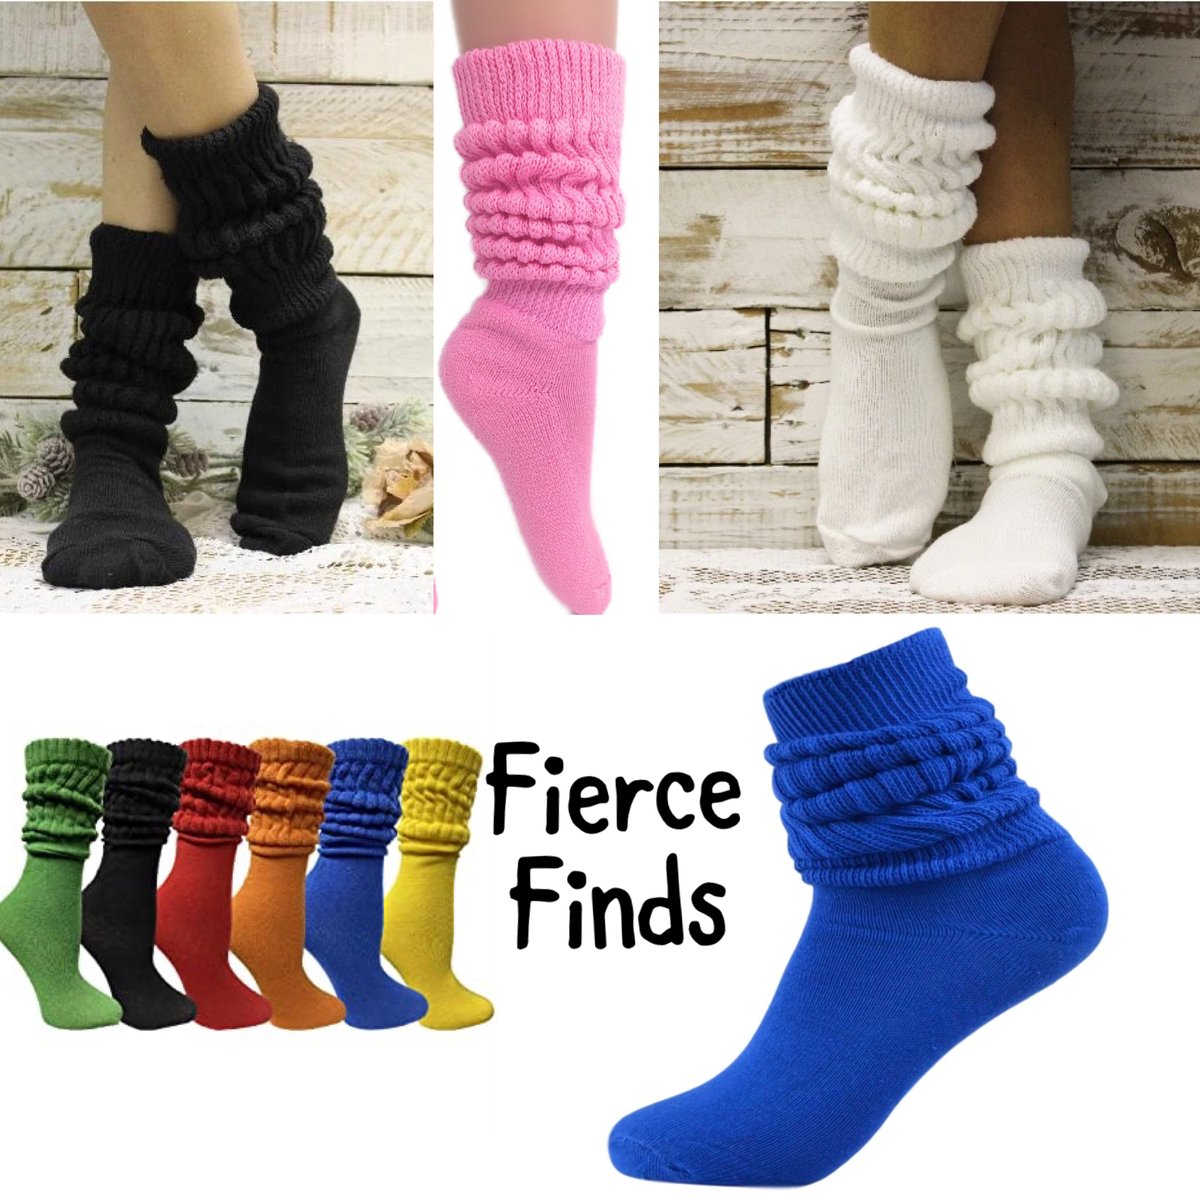 Image of Slouch Socks